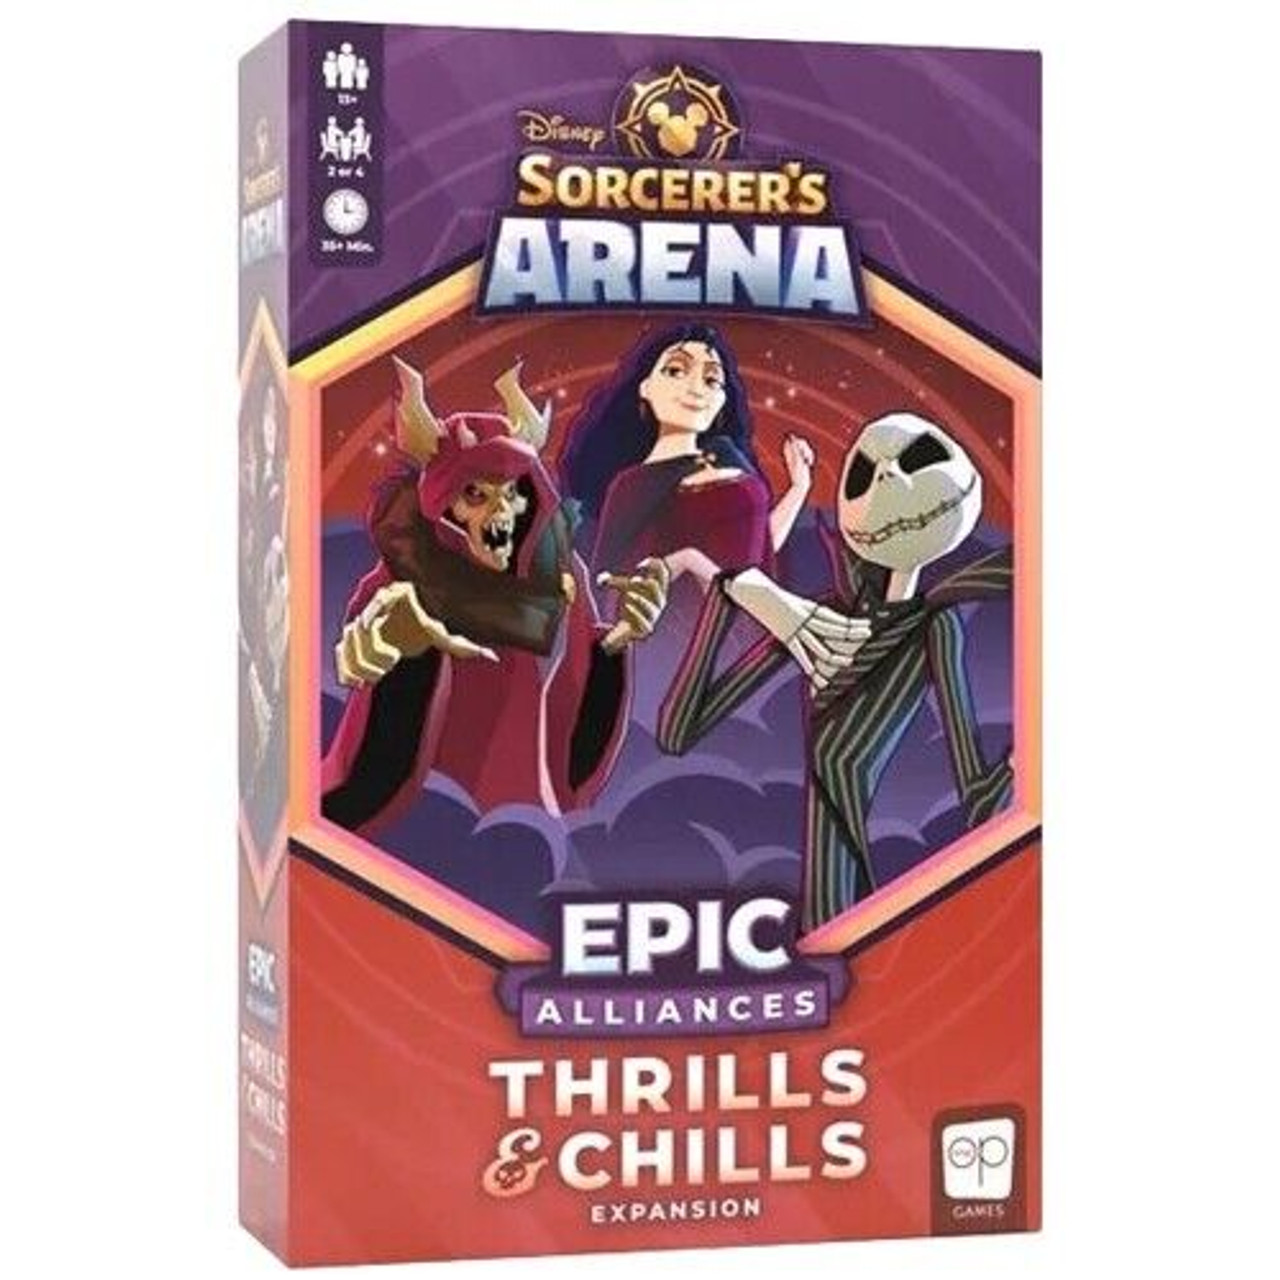 Disney Sorcerer's Arena: Epic Alliances -Thrills & Chills Expansion